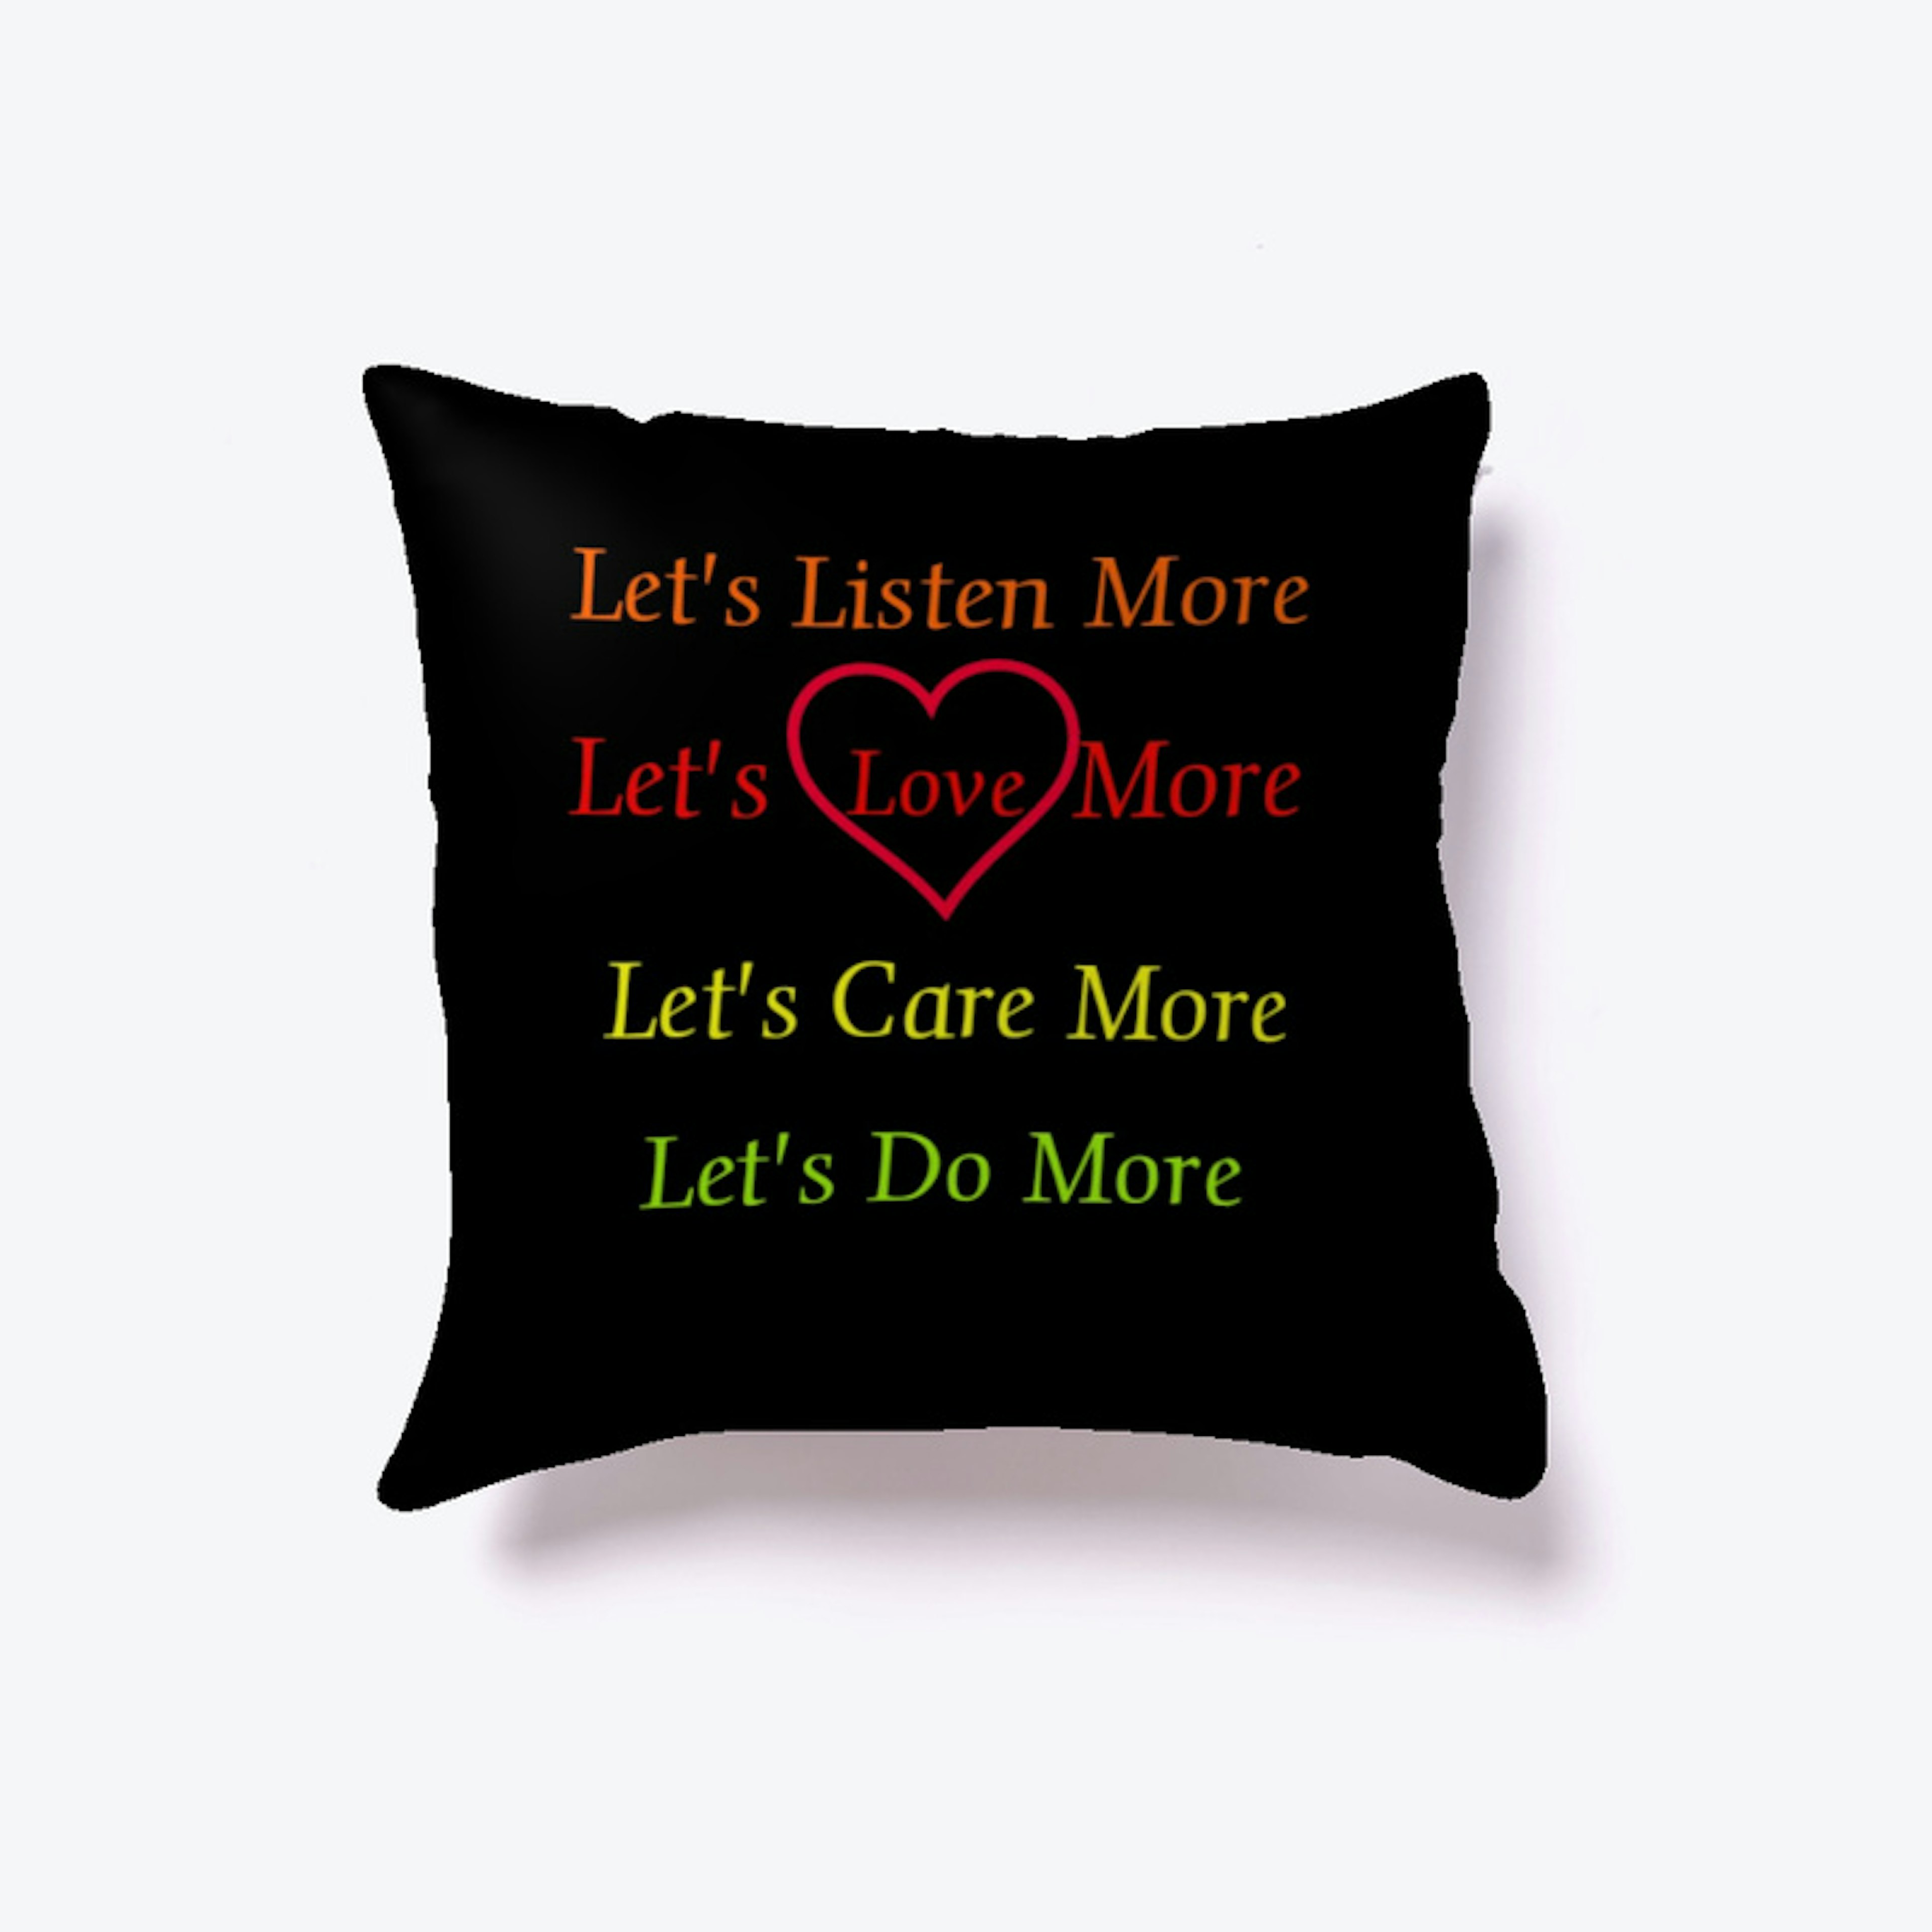 Let's Love More Pillow/Blanket